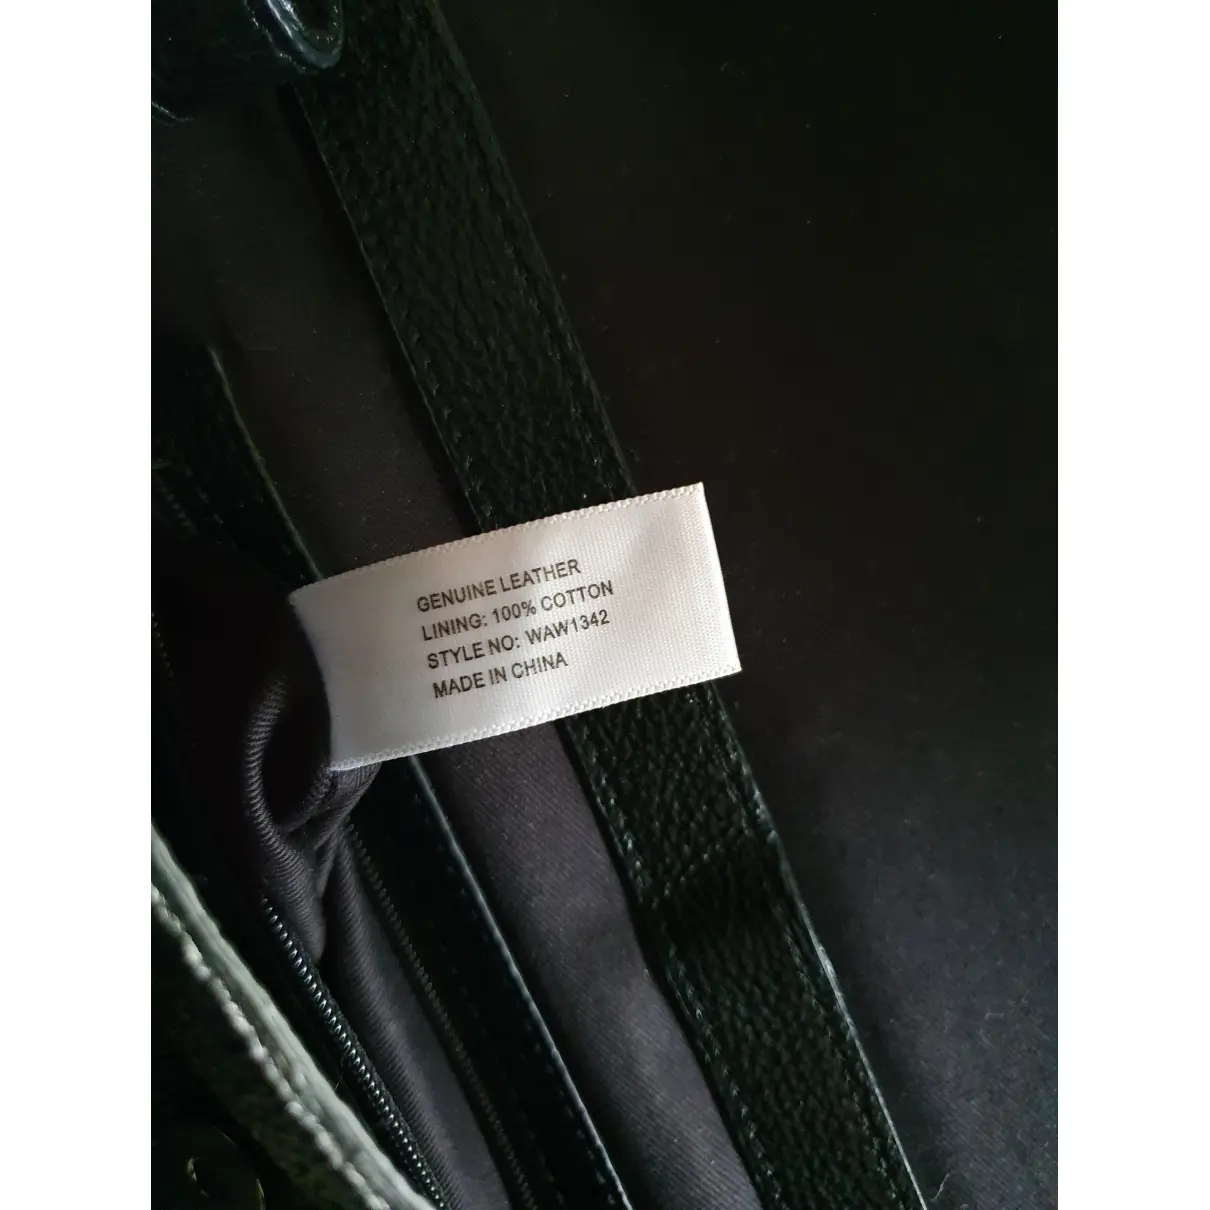 Buy Saba Leather handbag online